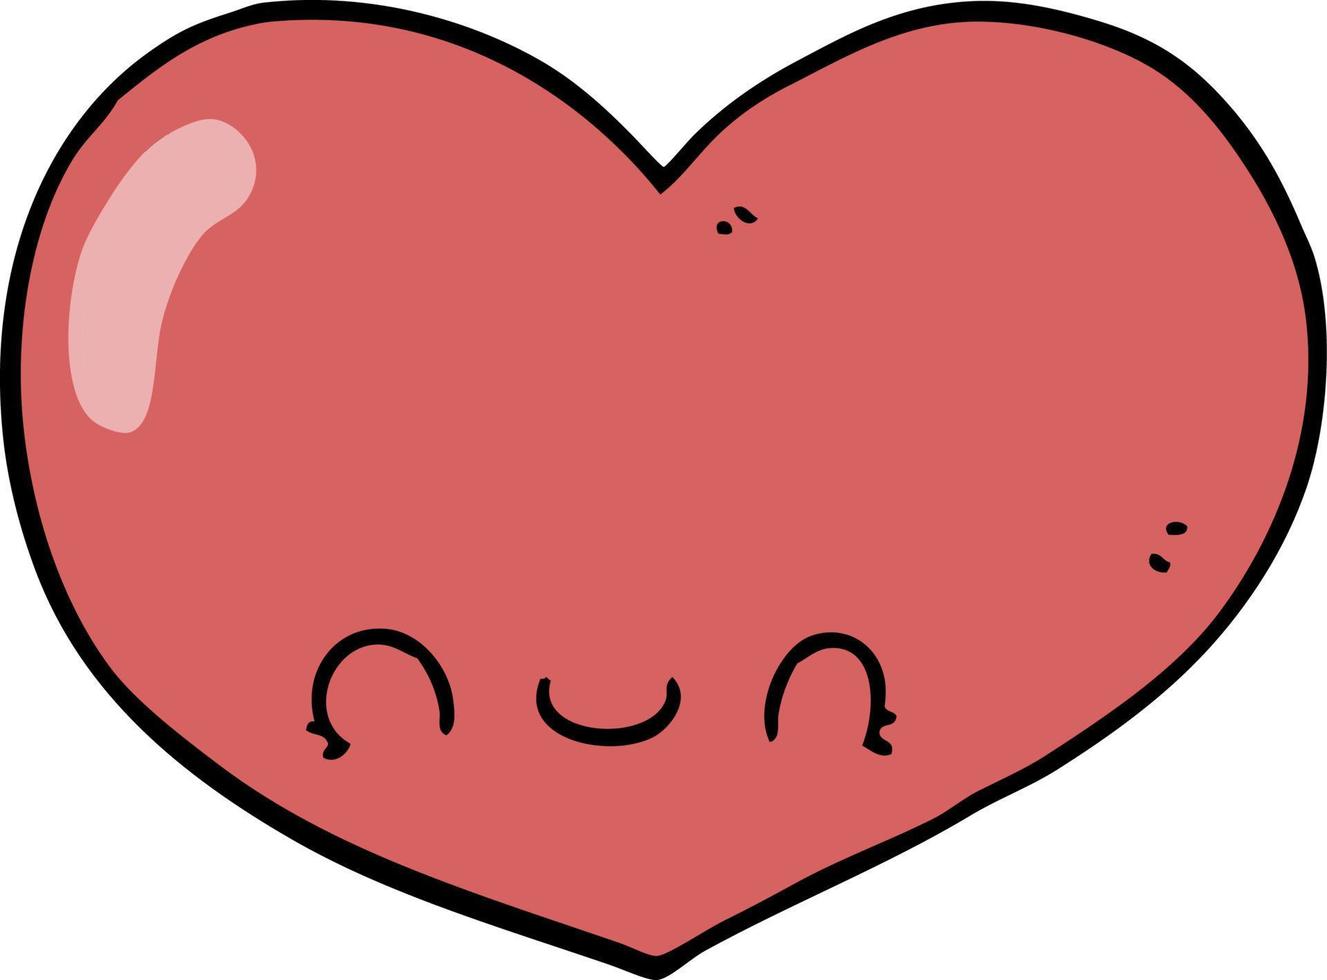 cartoon love heart character vector